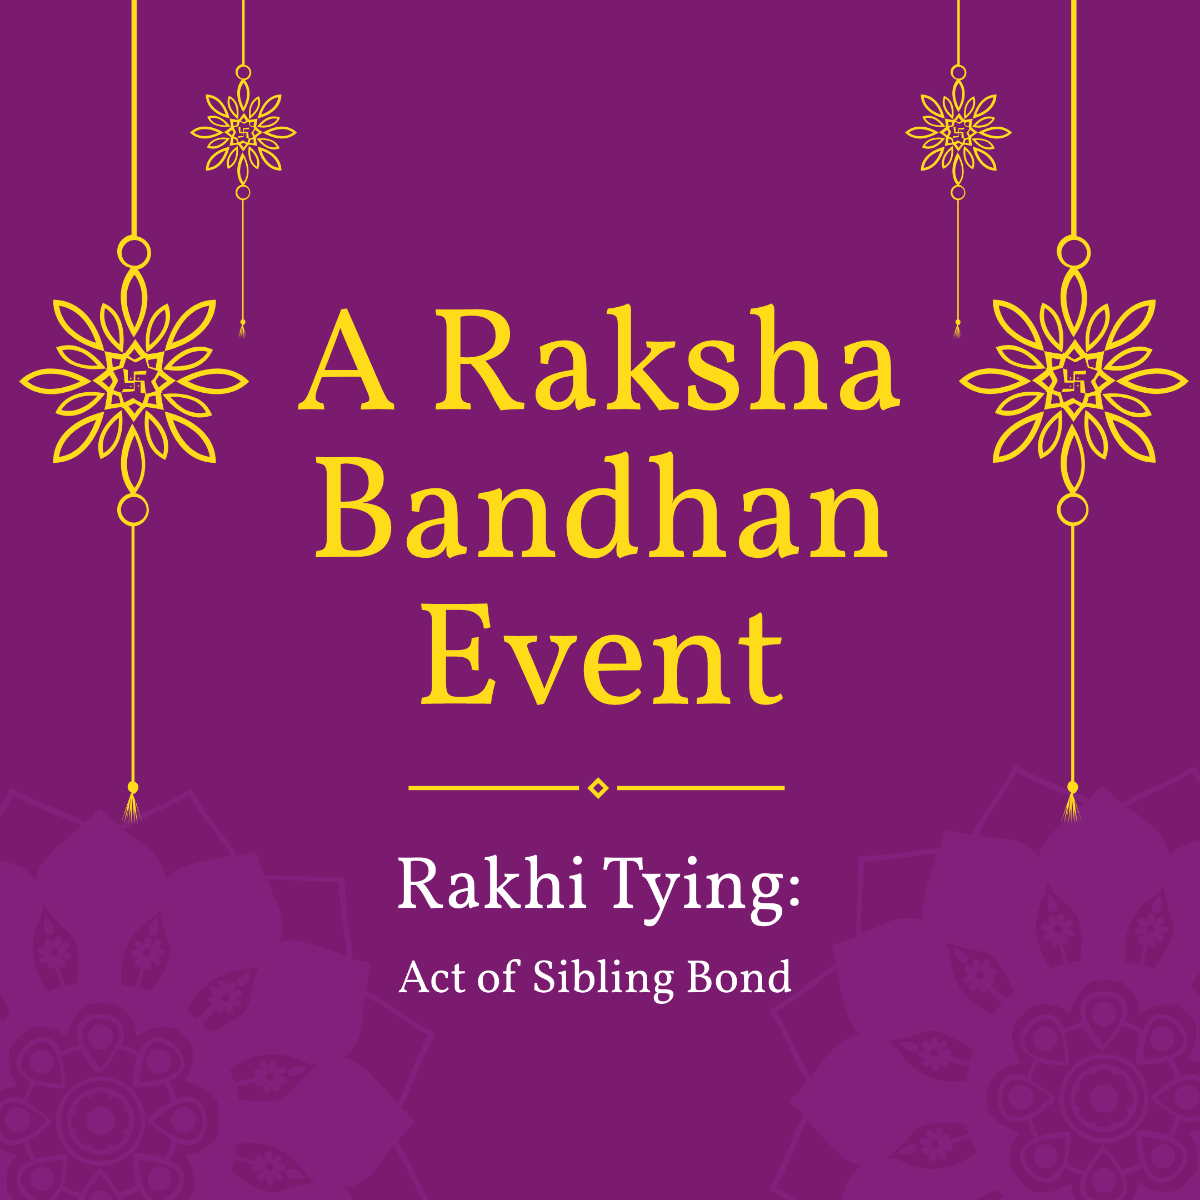 Raksha Bandhan Event Instagram Post Template